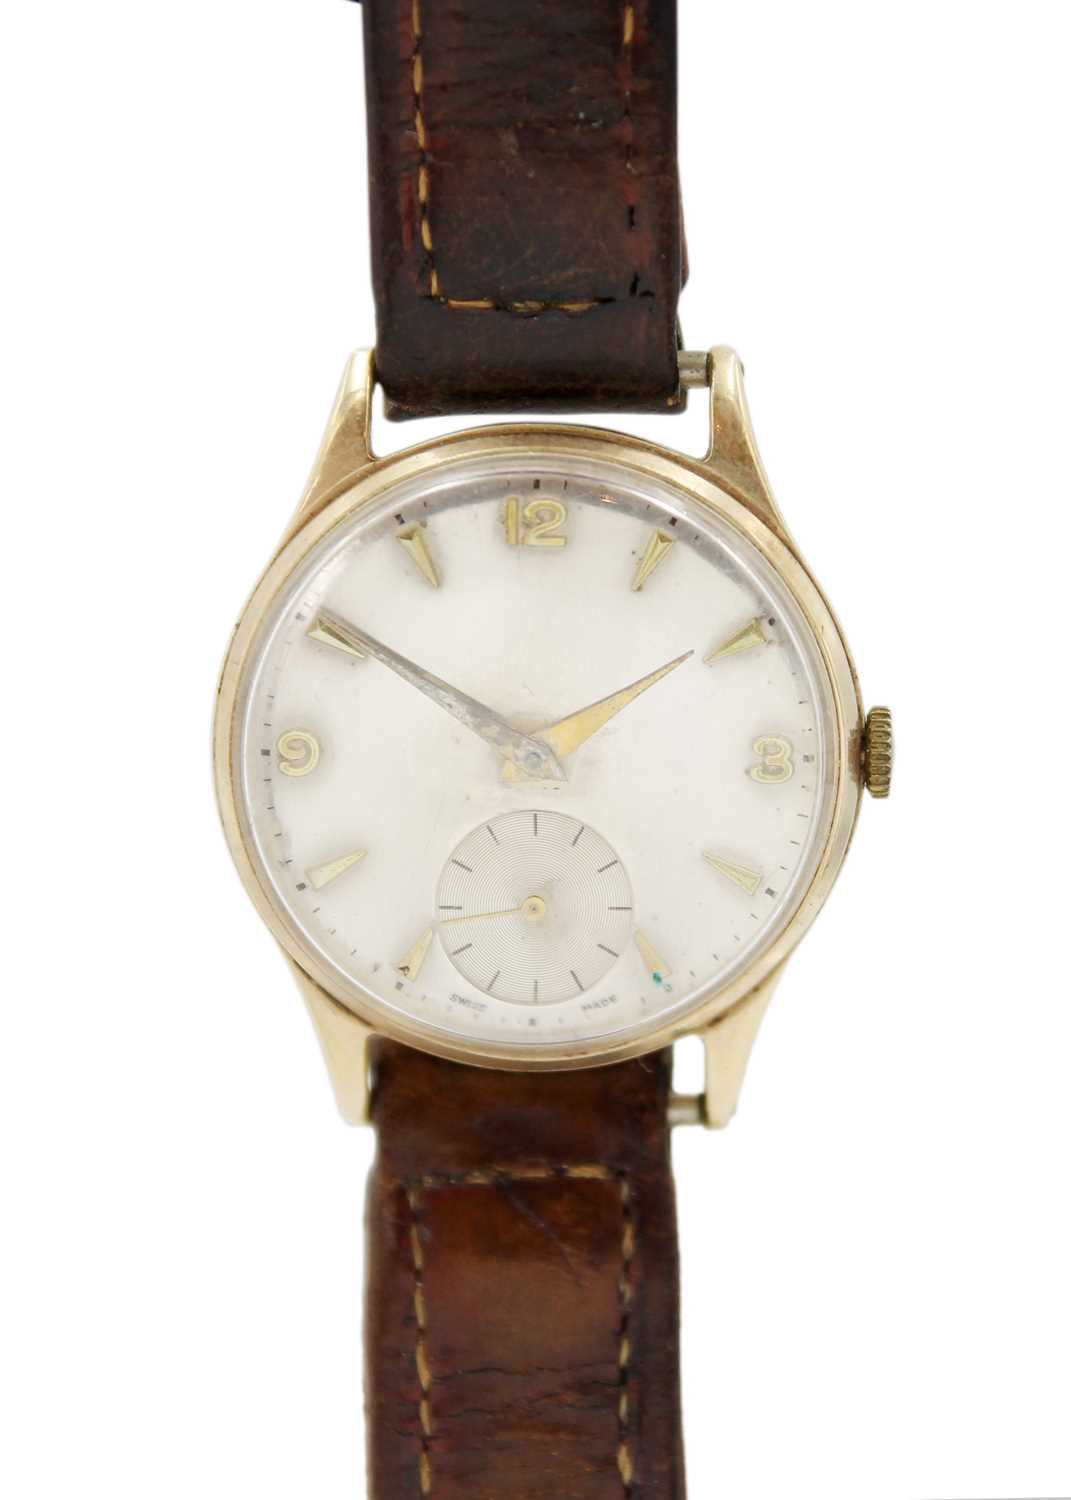 ZENITH - A 9ct cased 1950's manual wind gentleman's wristwatch.